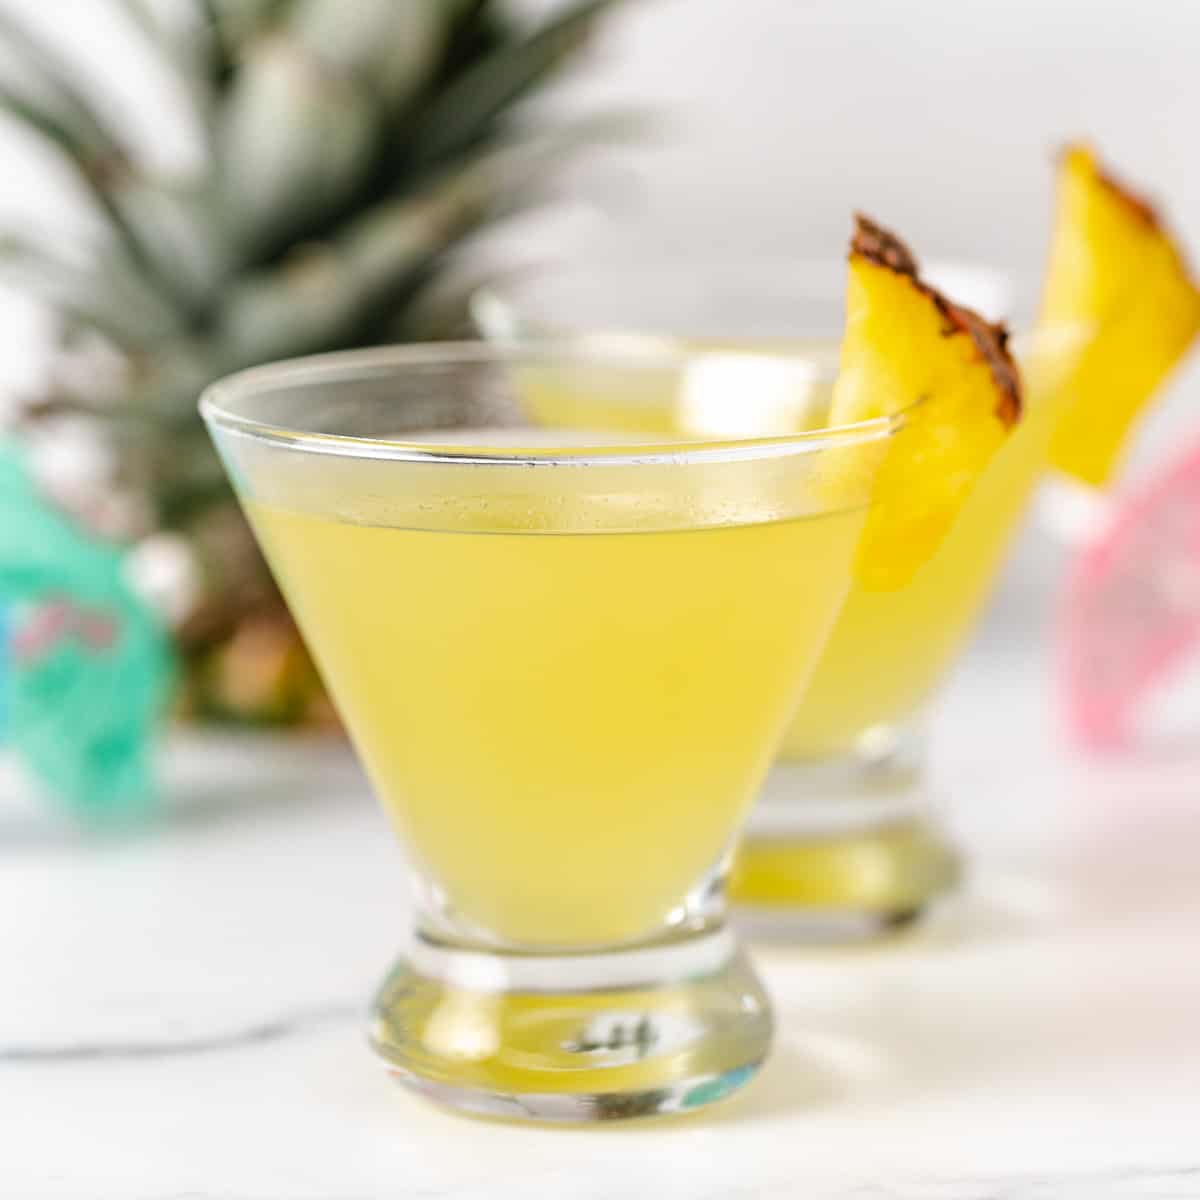 Pineapple martini with coconut rum